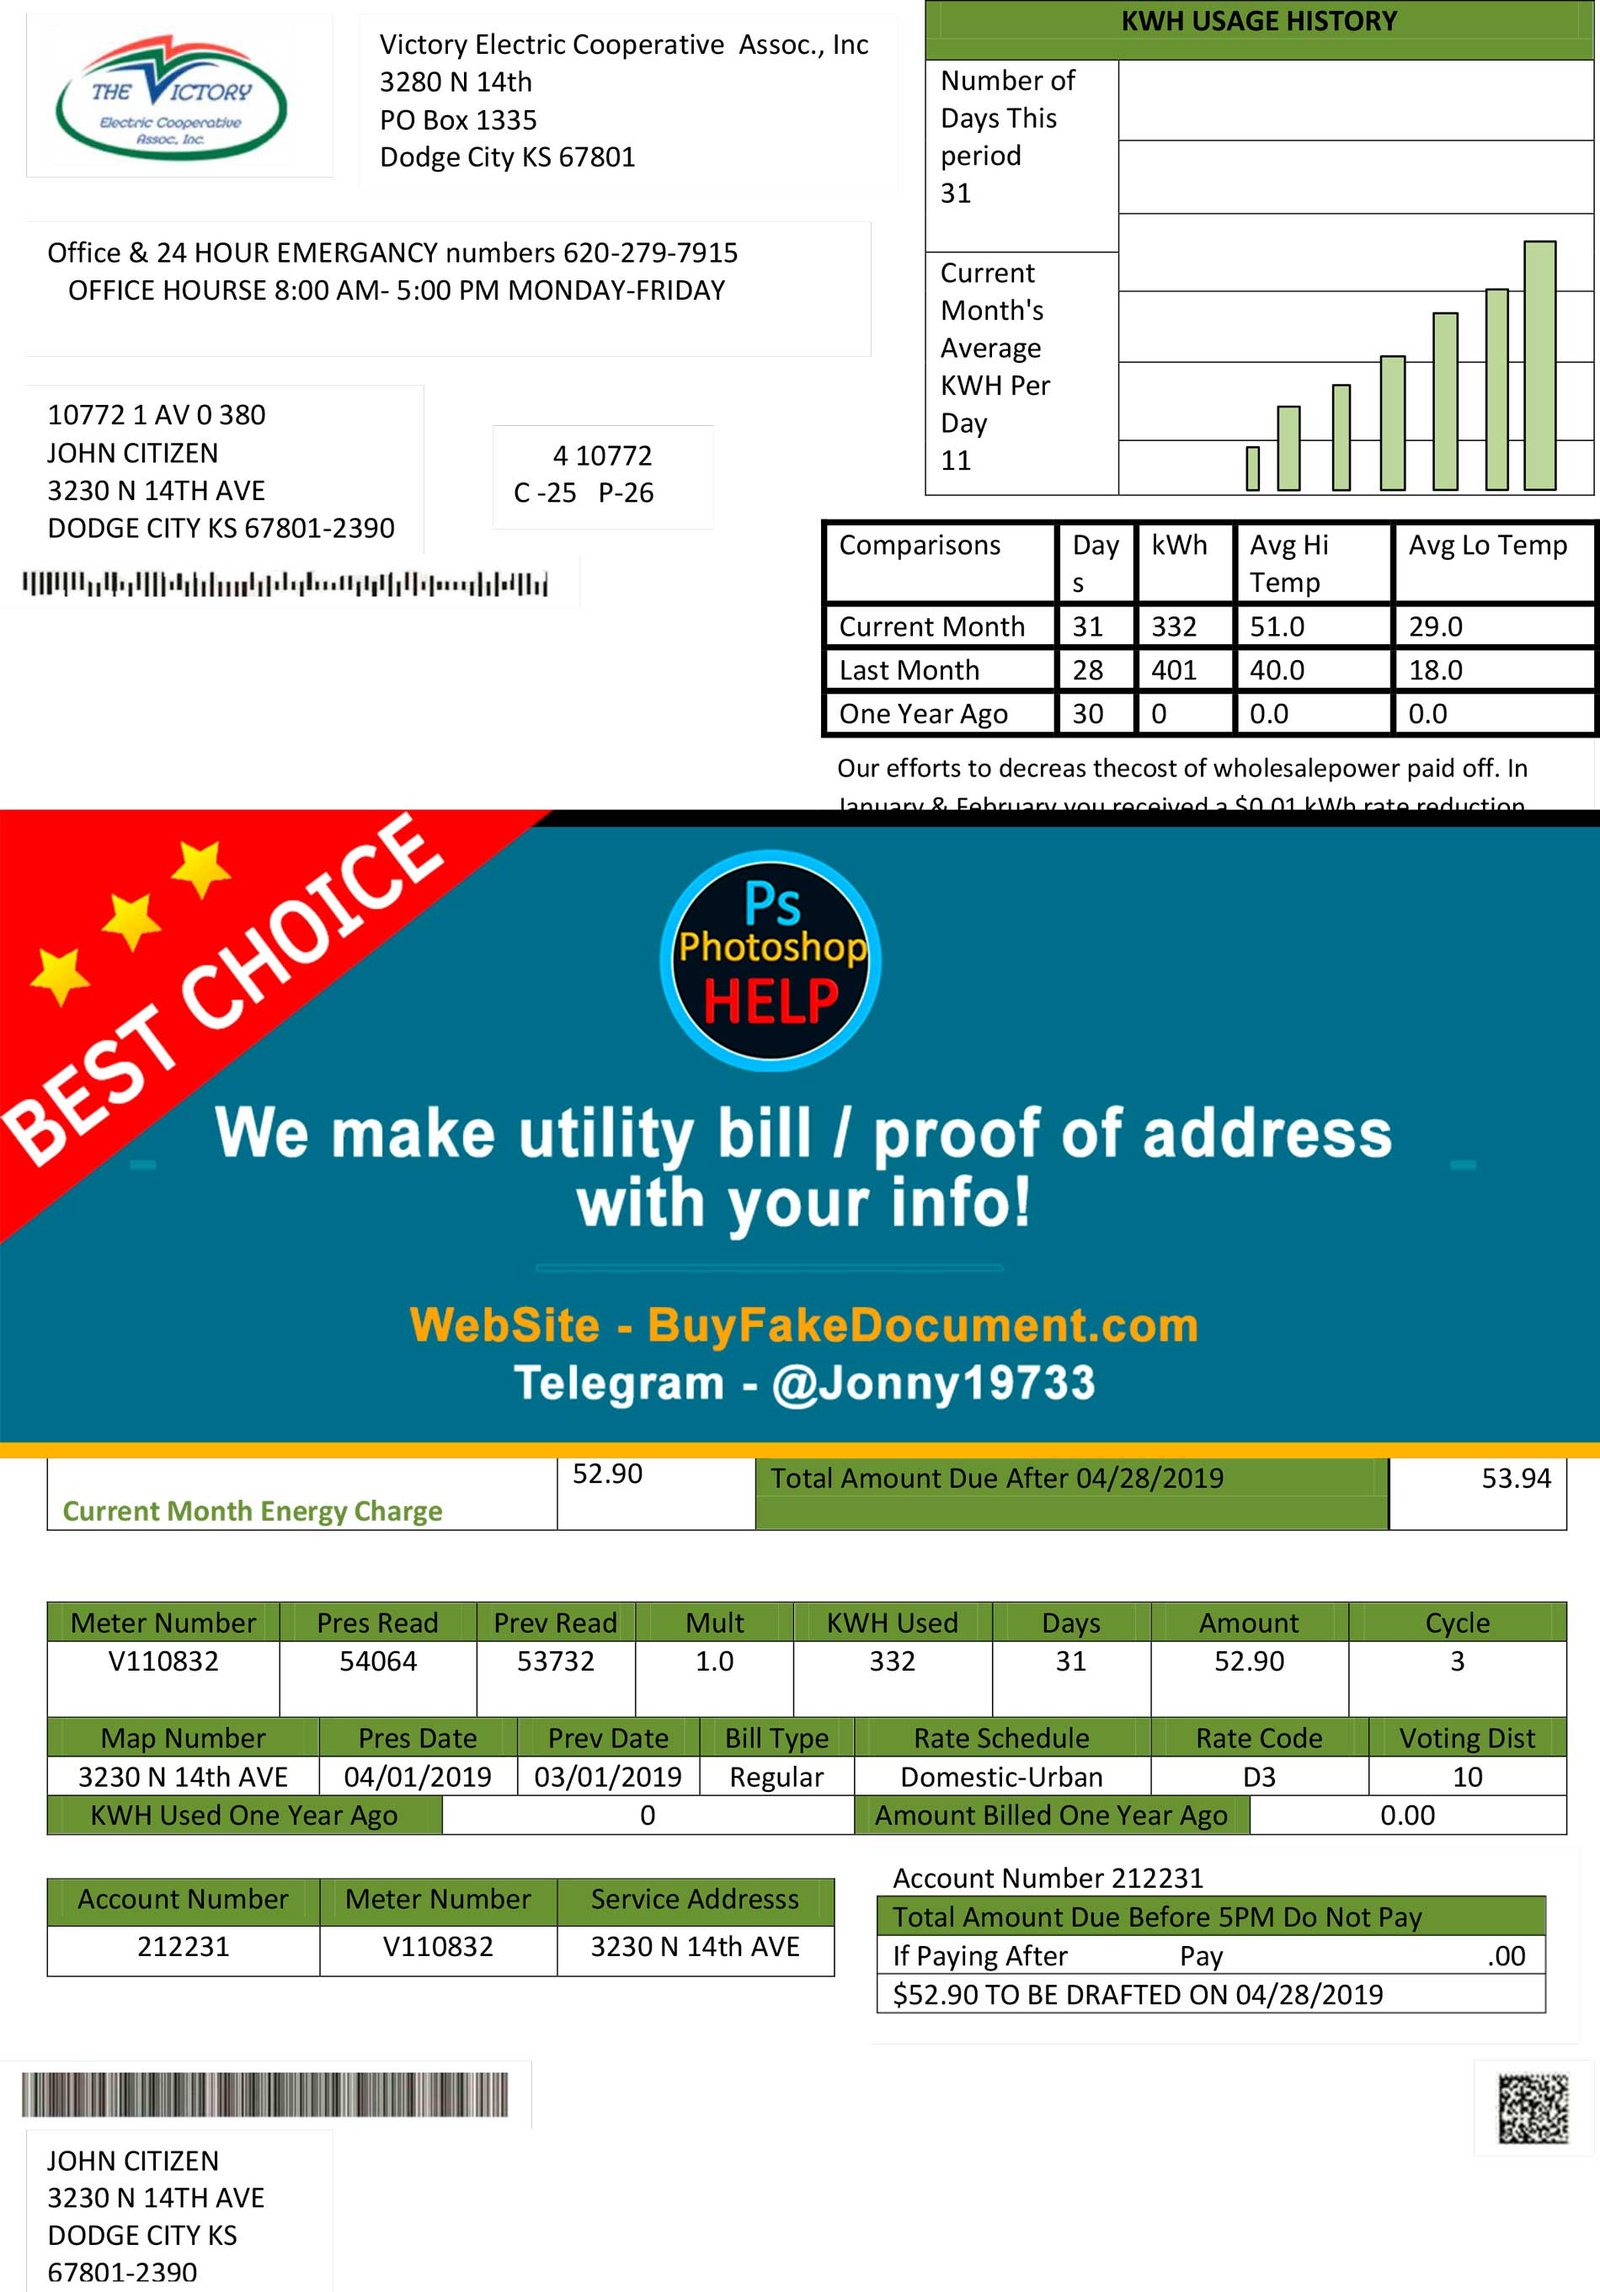 Kansas Victory Electric utility bill Fake Utility bill